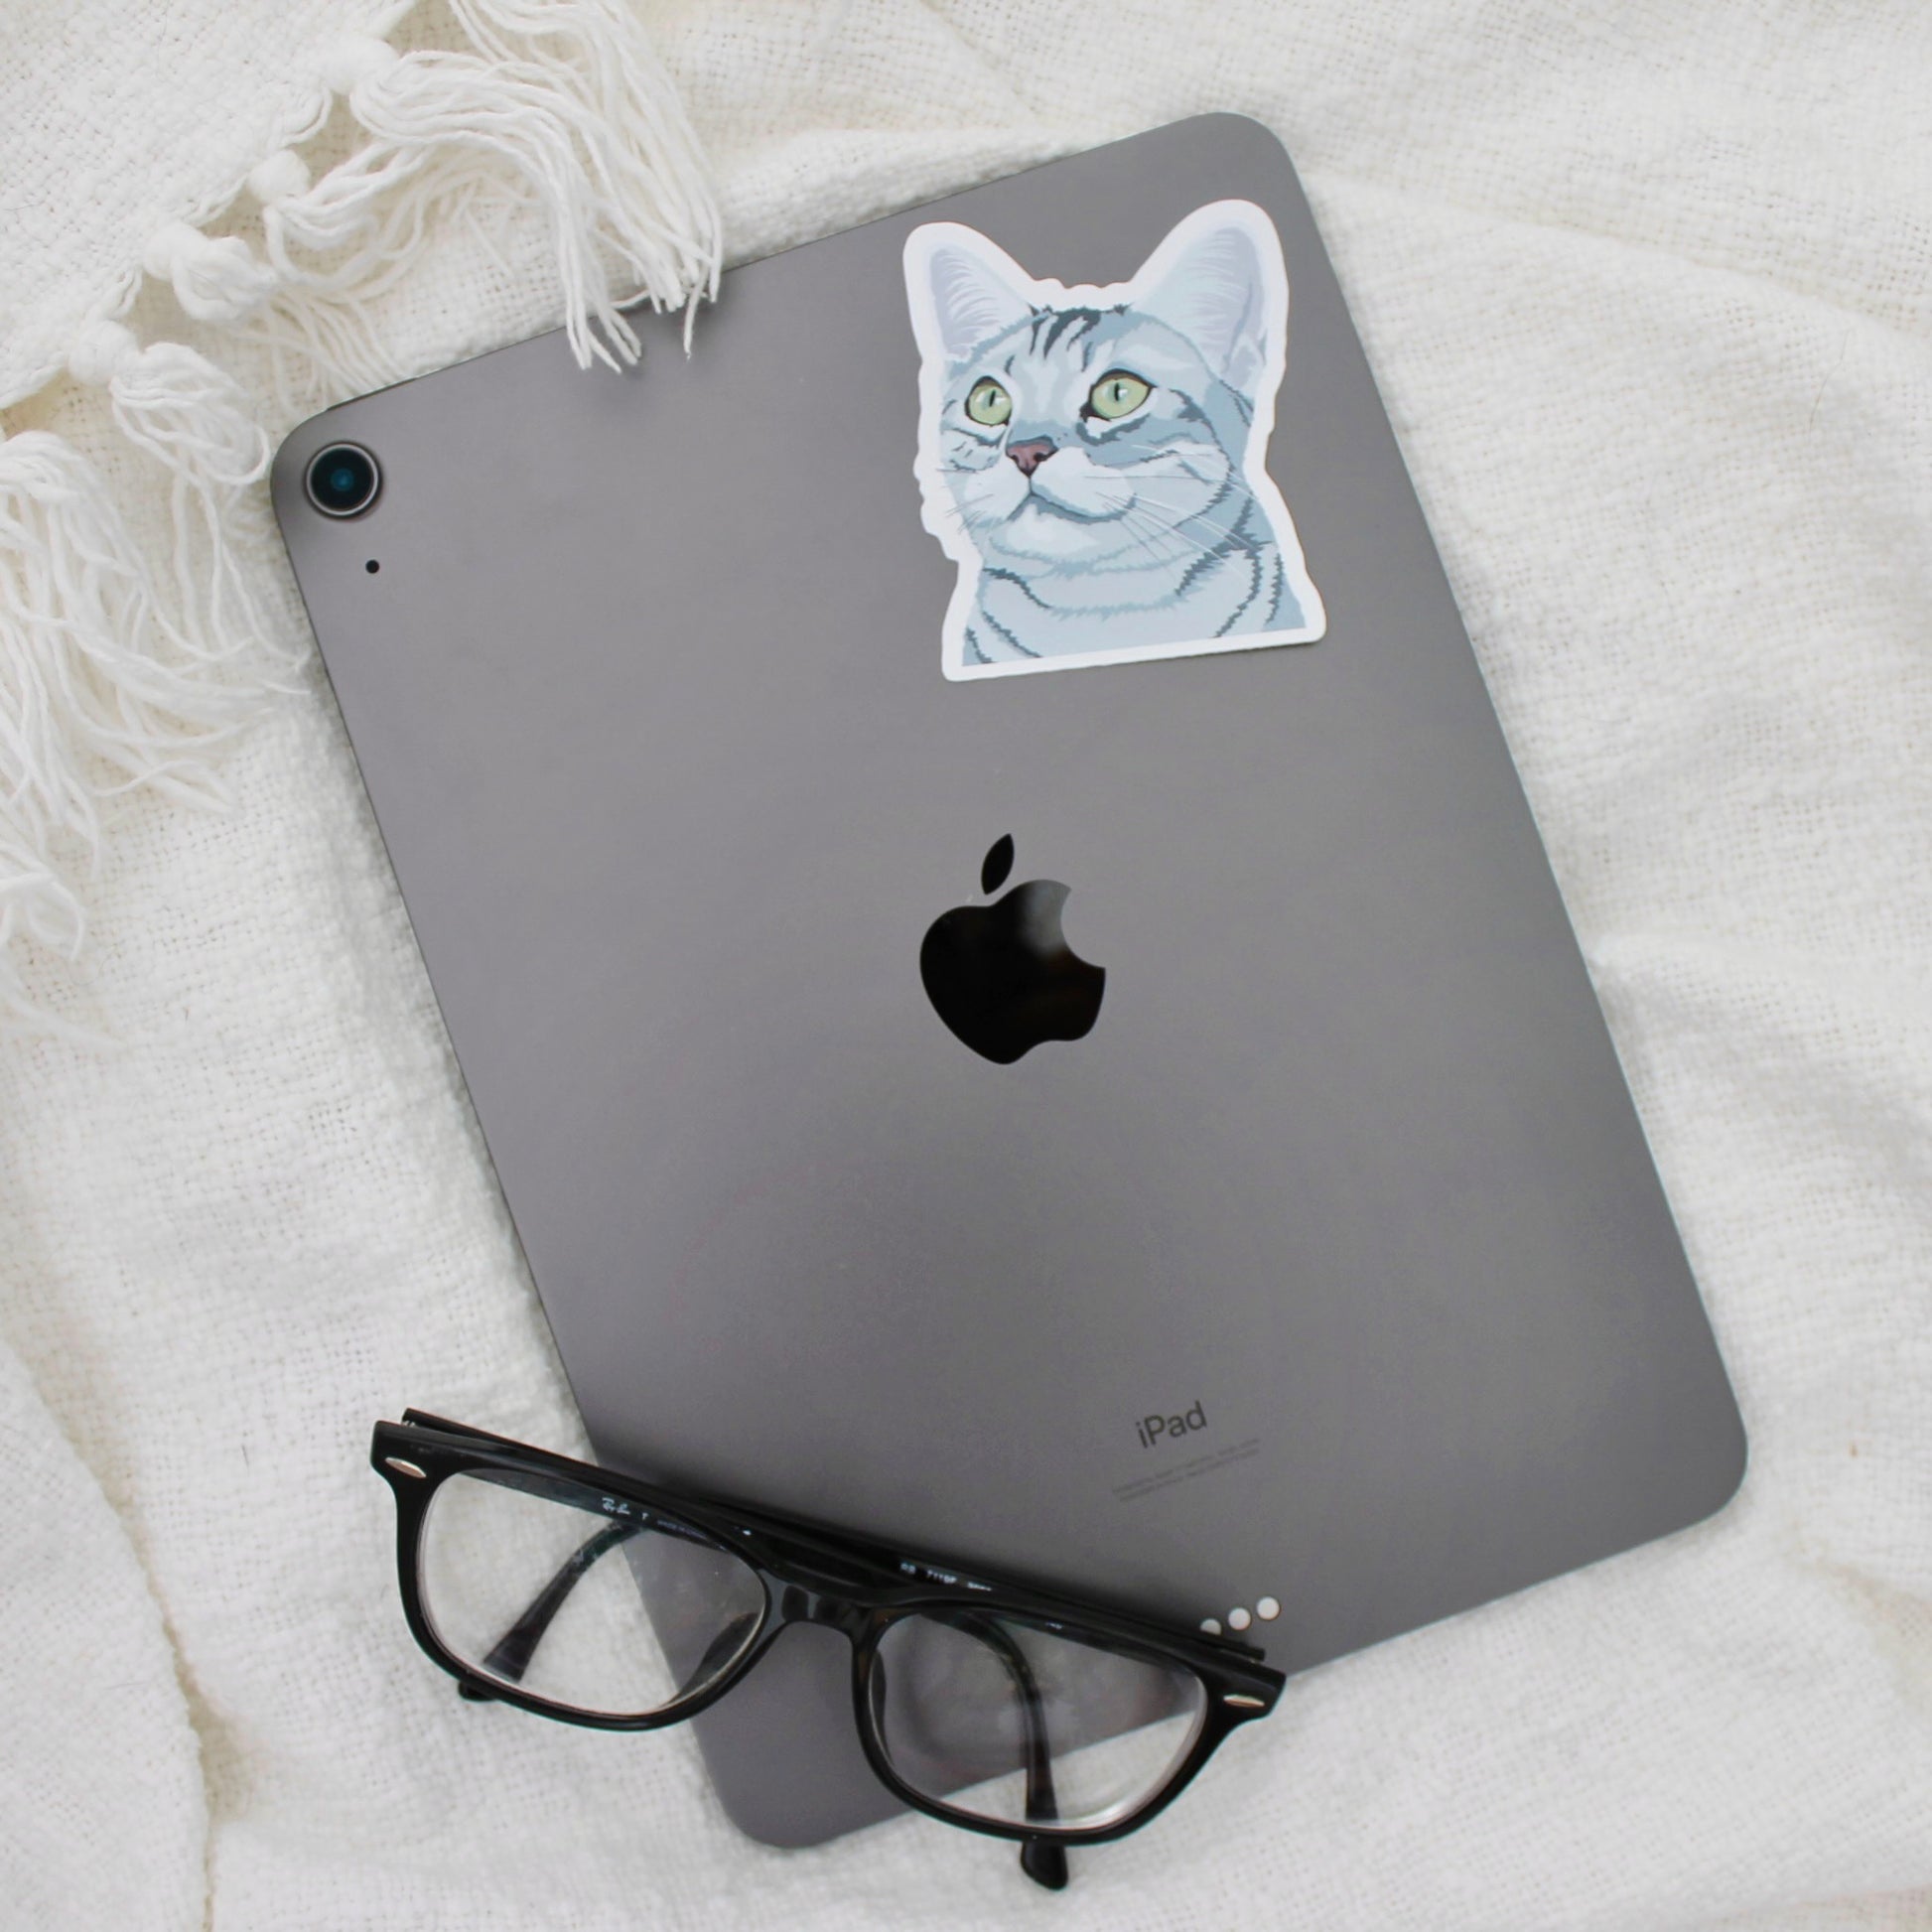 American shorthair cat sticker on ipad